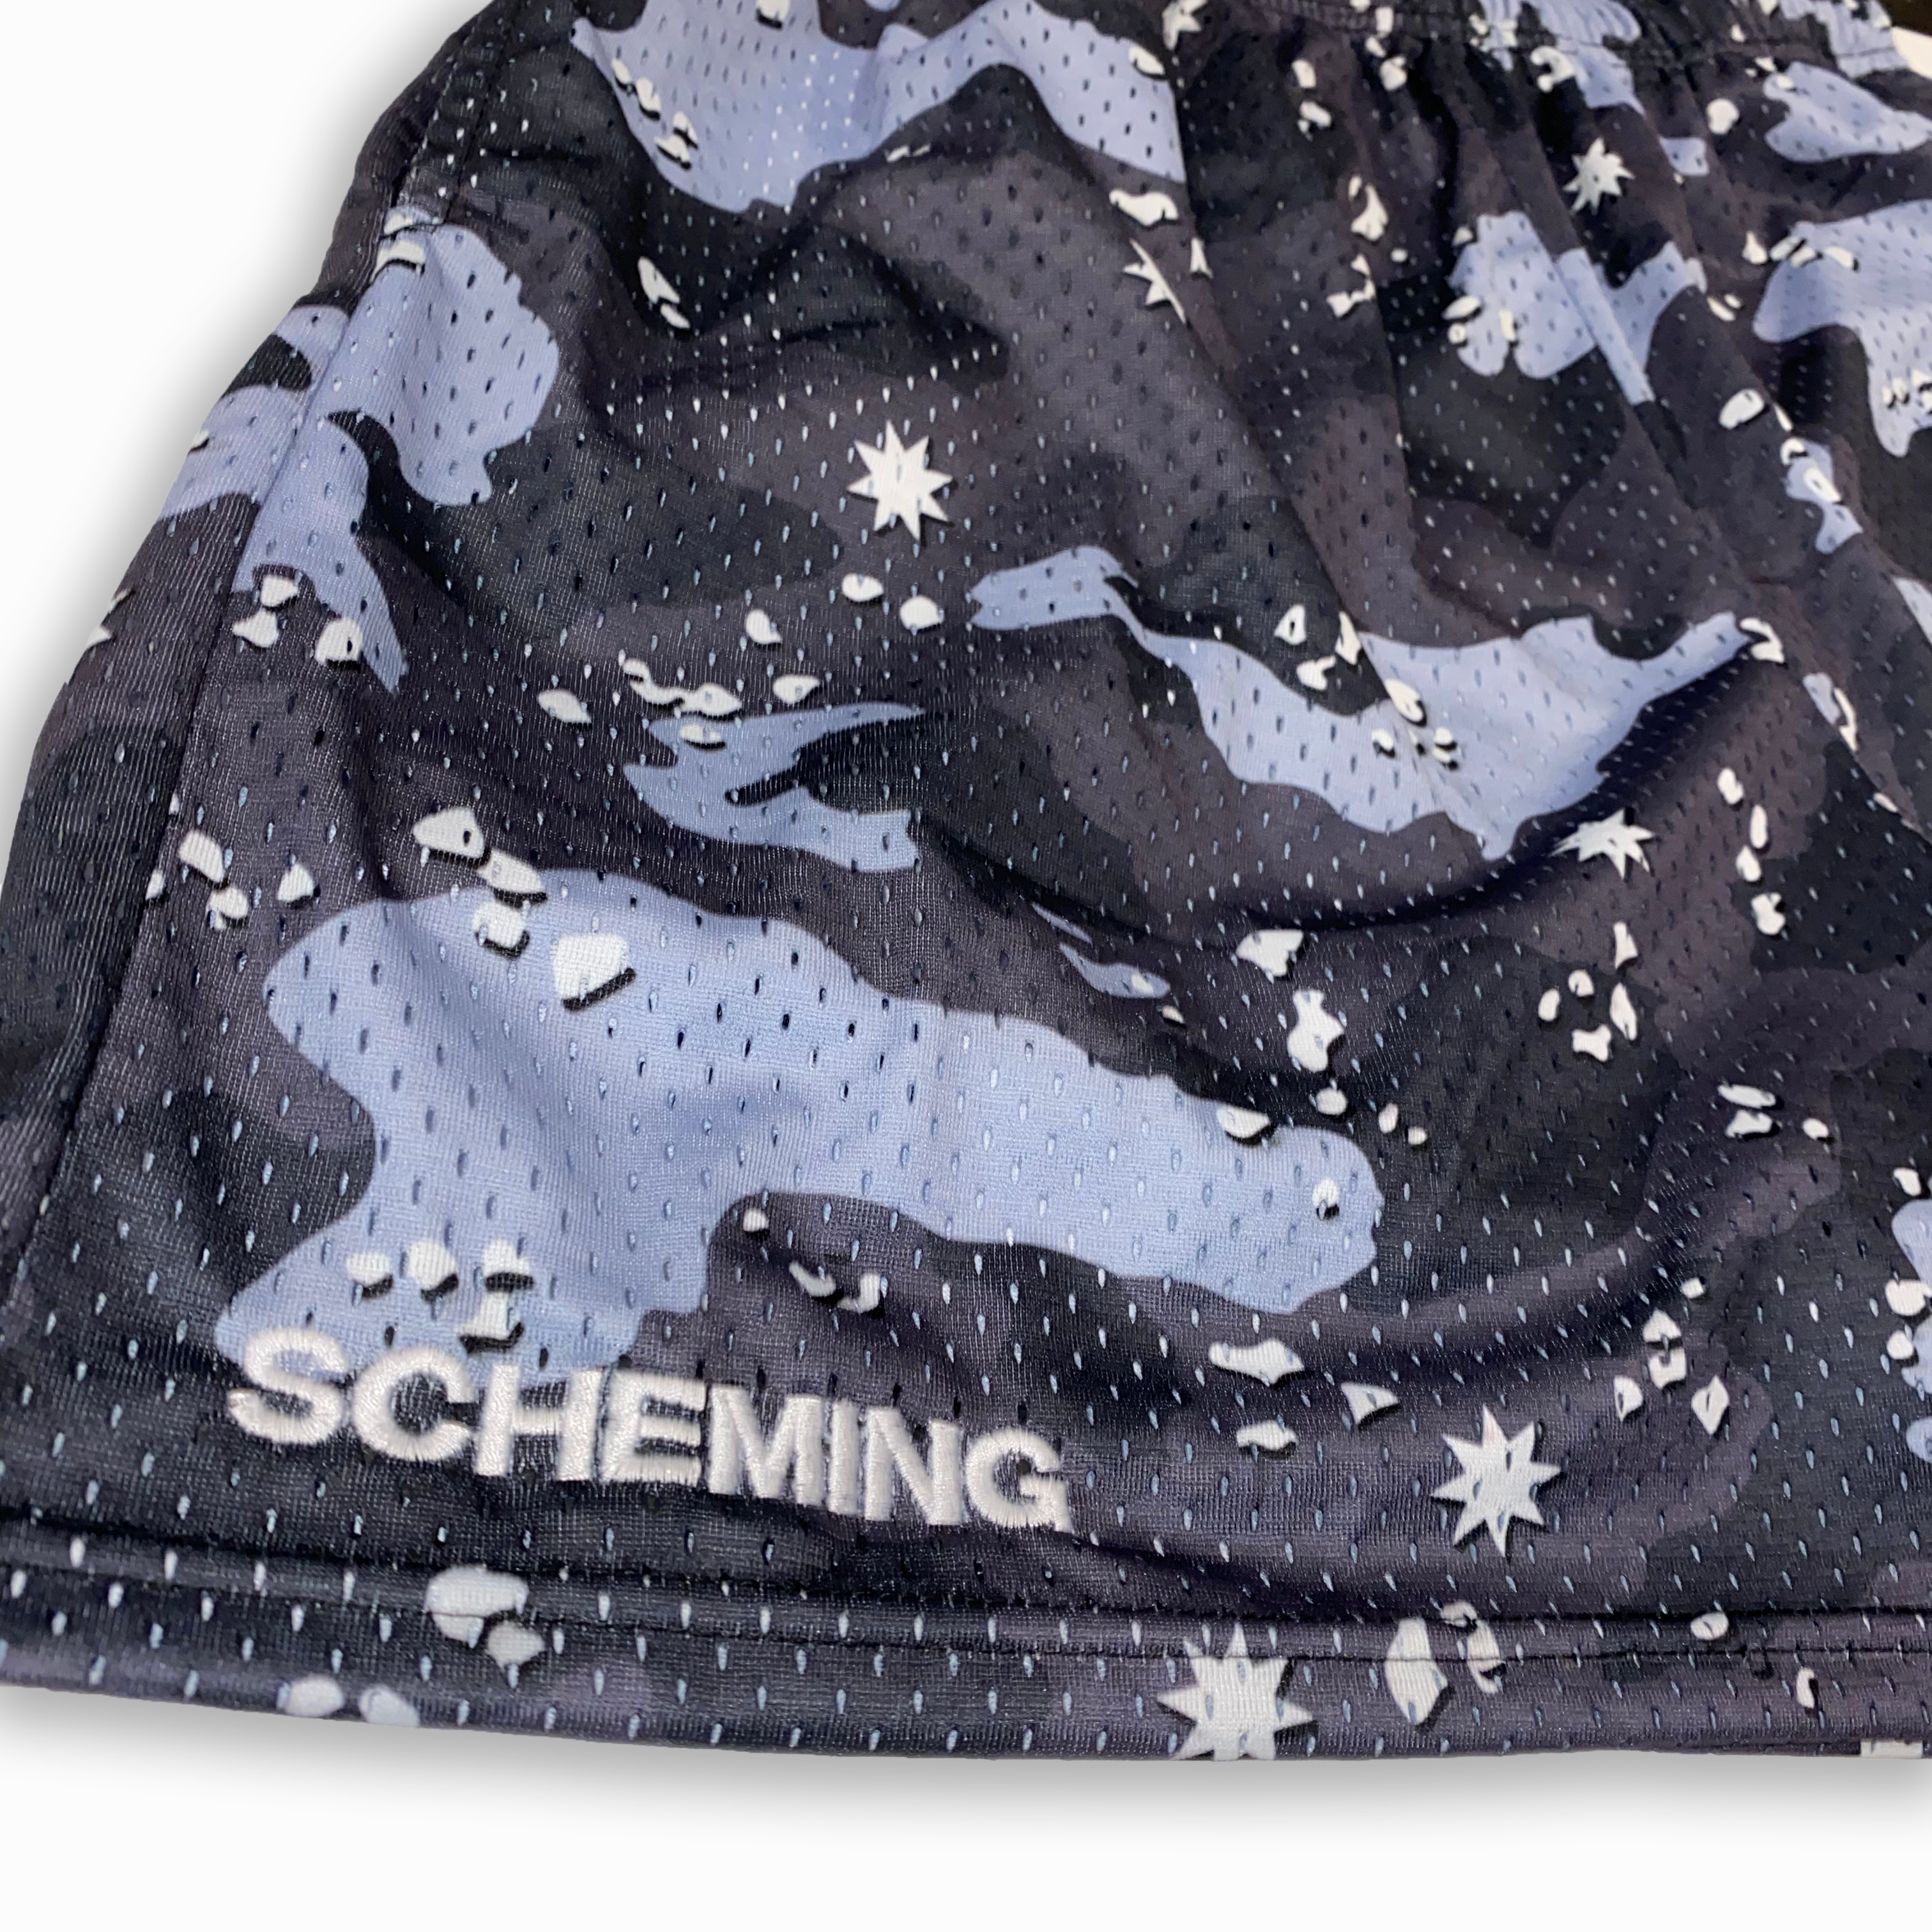 Urban Camouflage Mesh Shorts - Scheming Co.